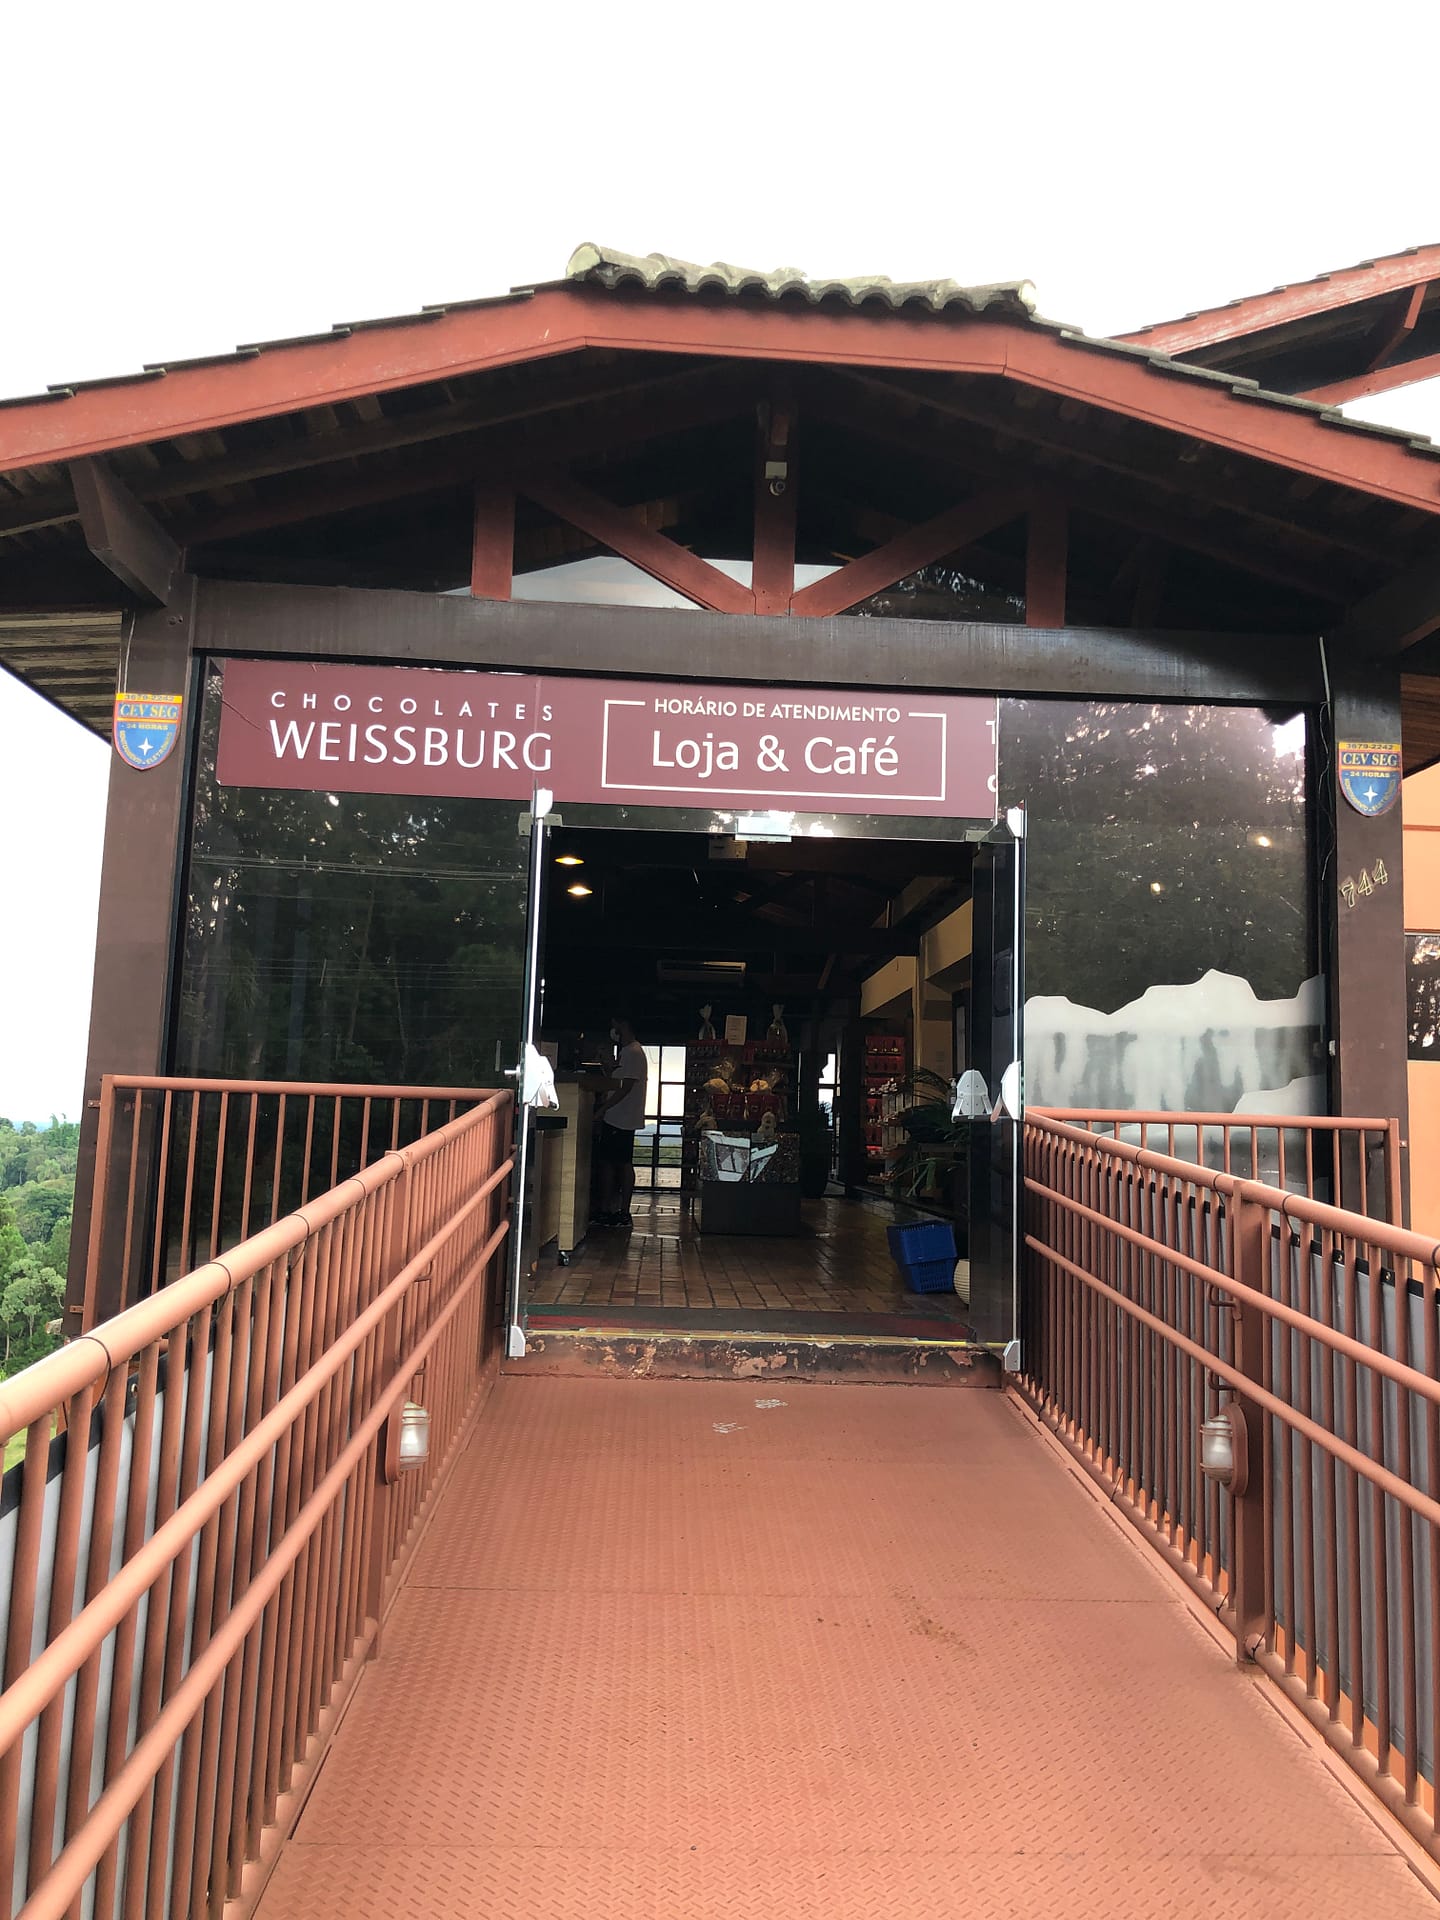 Fábrica de chocolates Weissburg